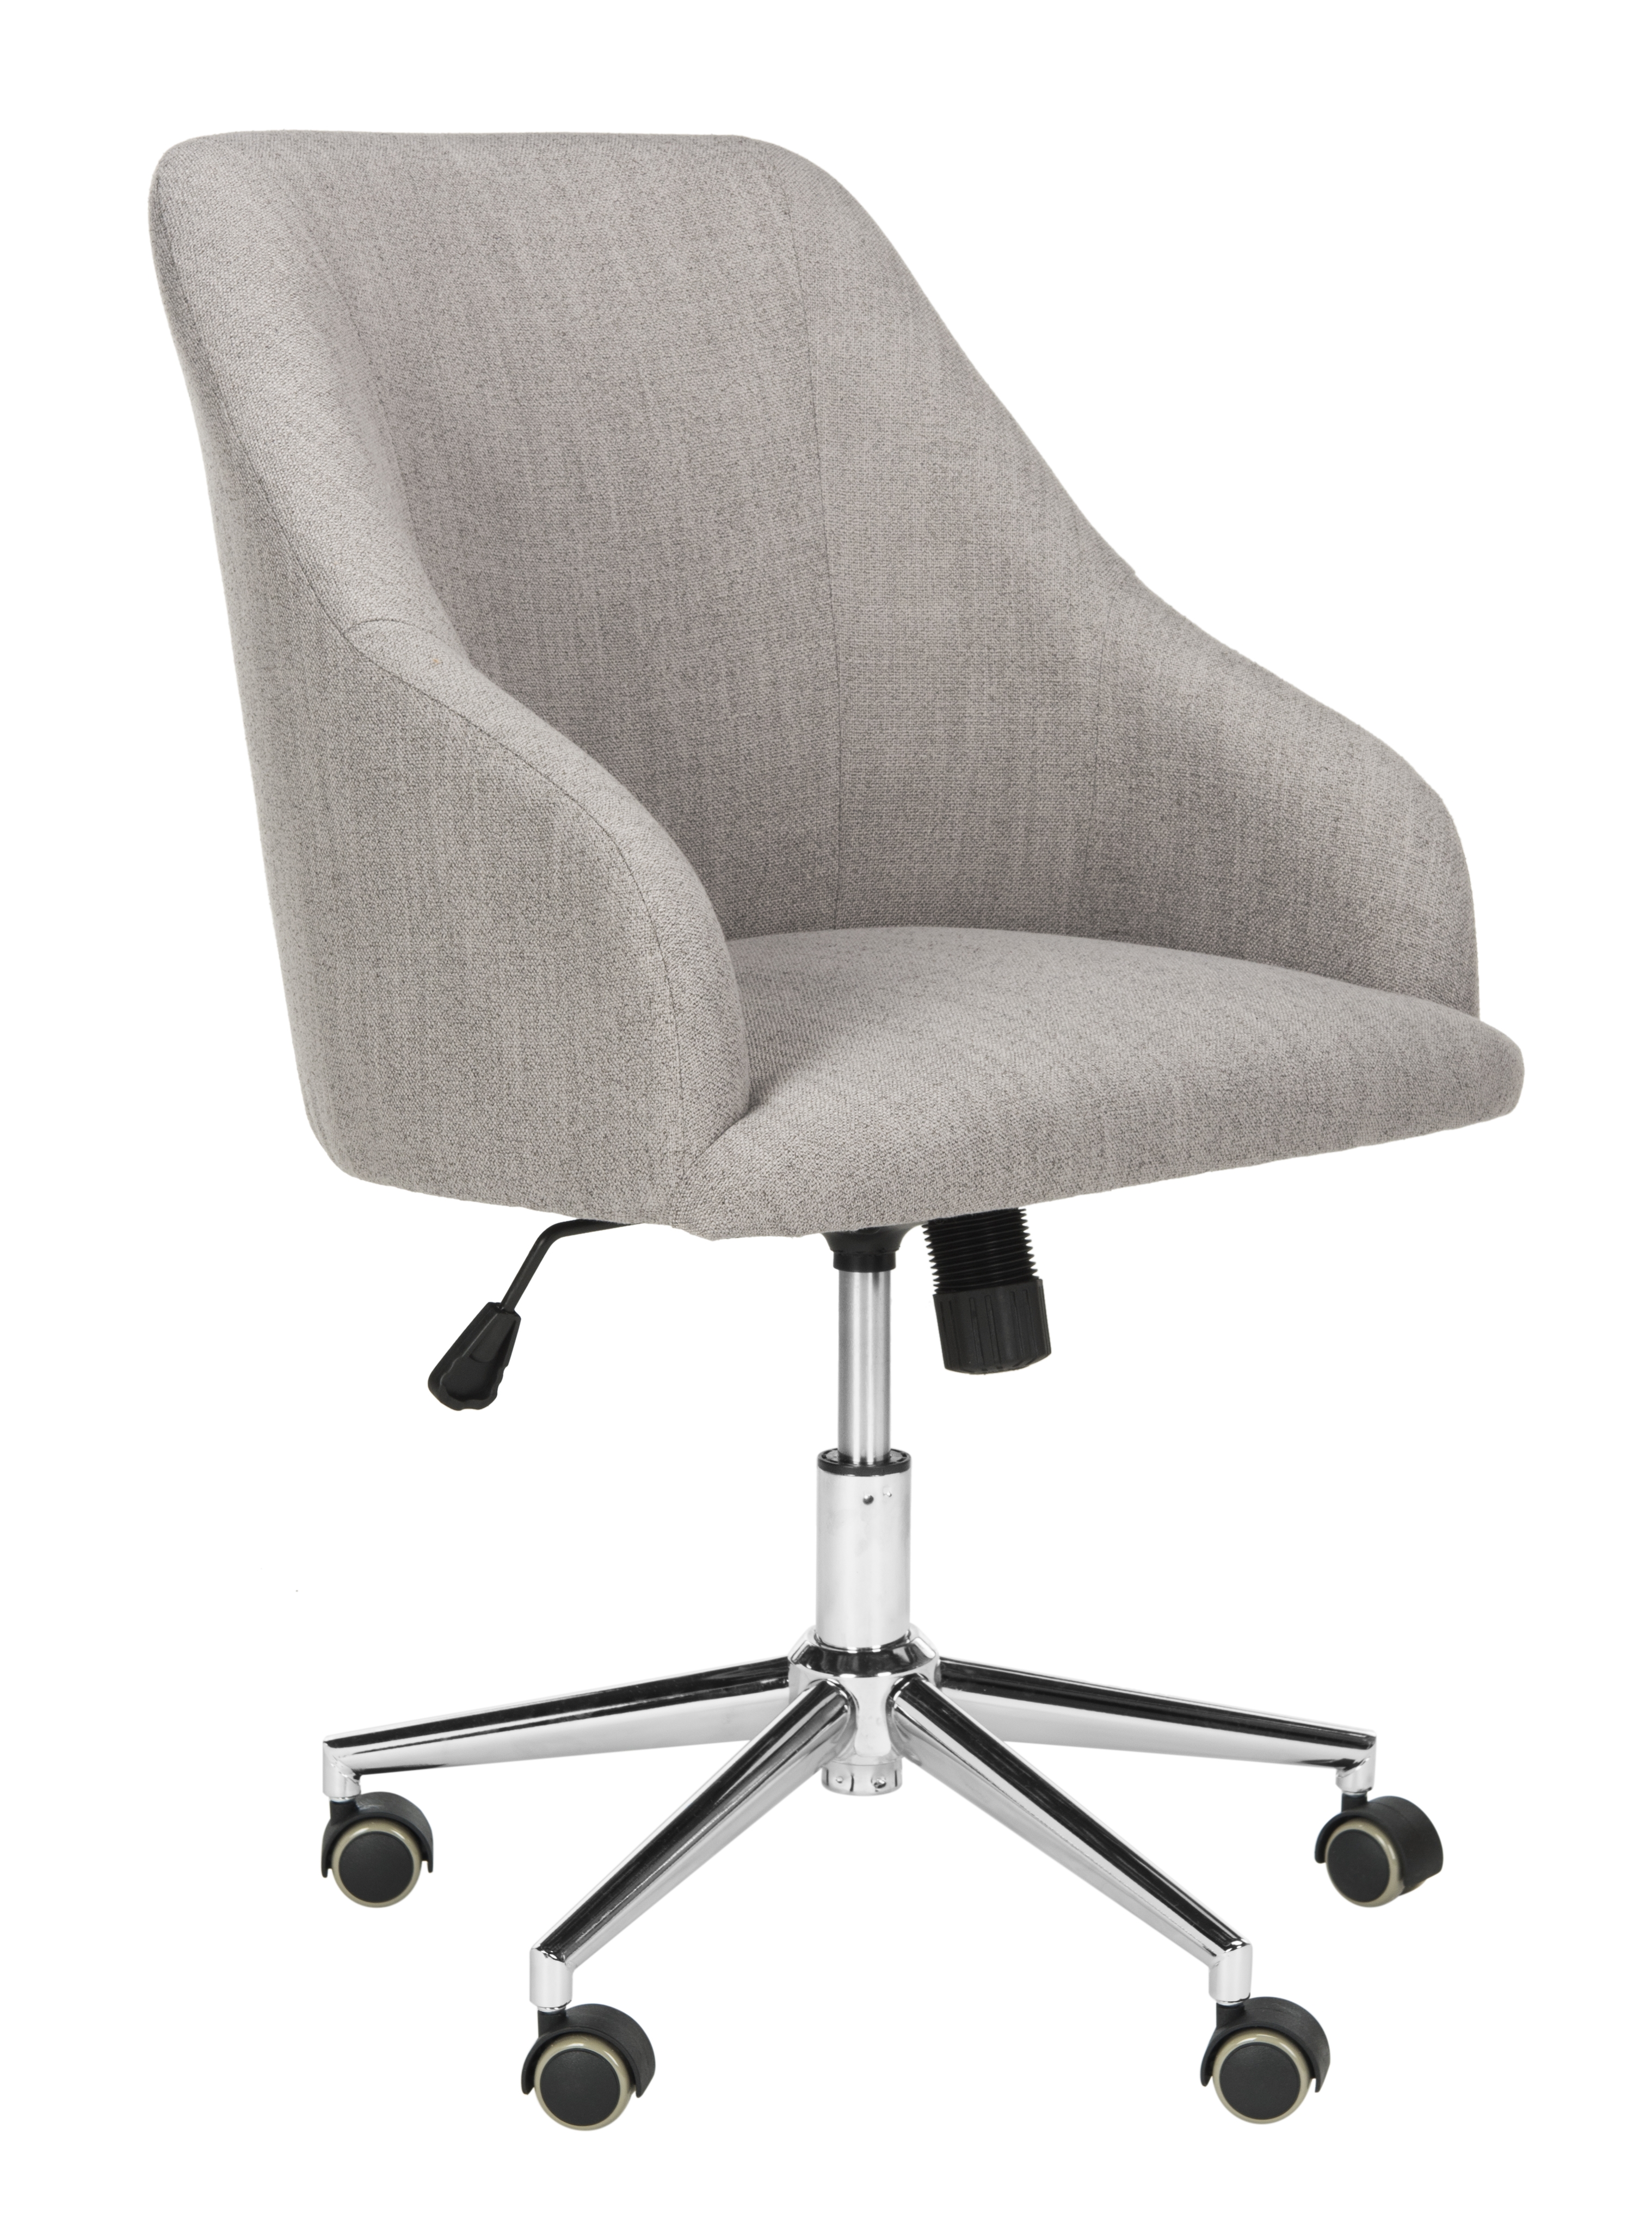 Adrienne Linen Chrome Leg Swivel Office Chair - Grey/Chrome - Safavieh - Image 0